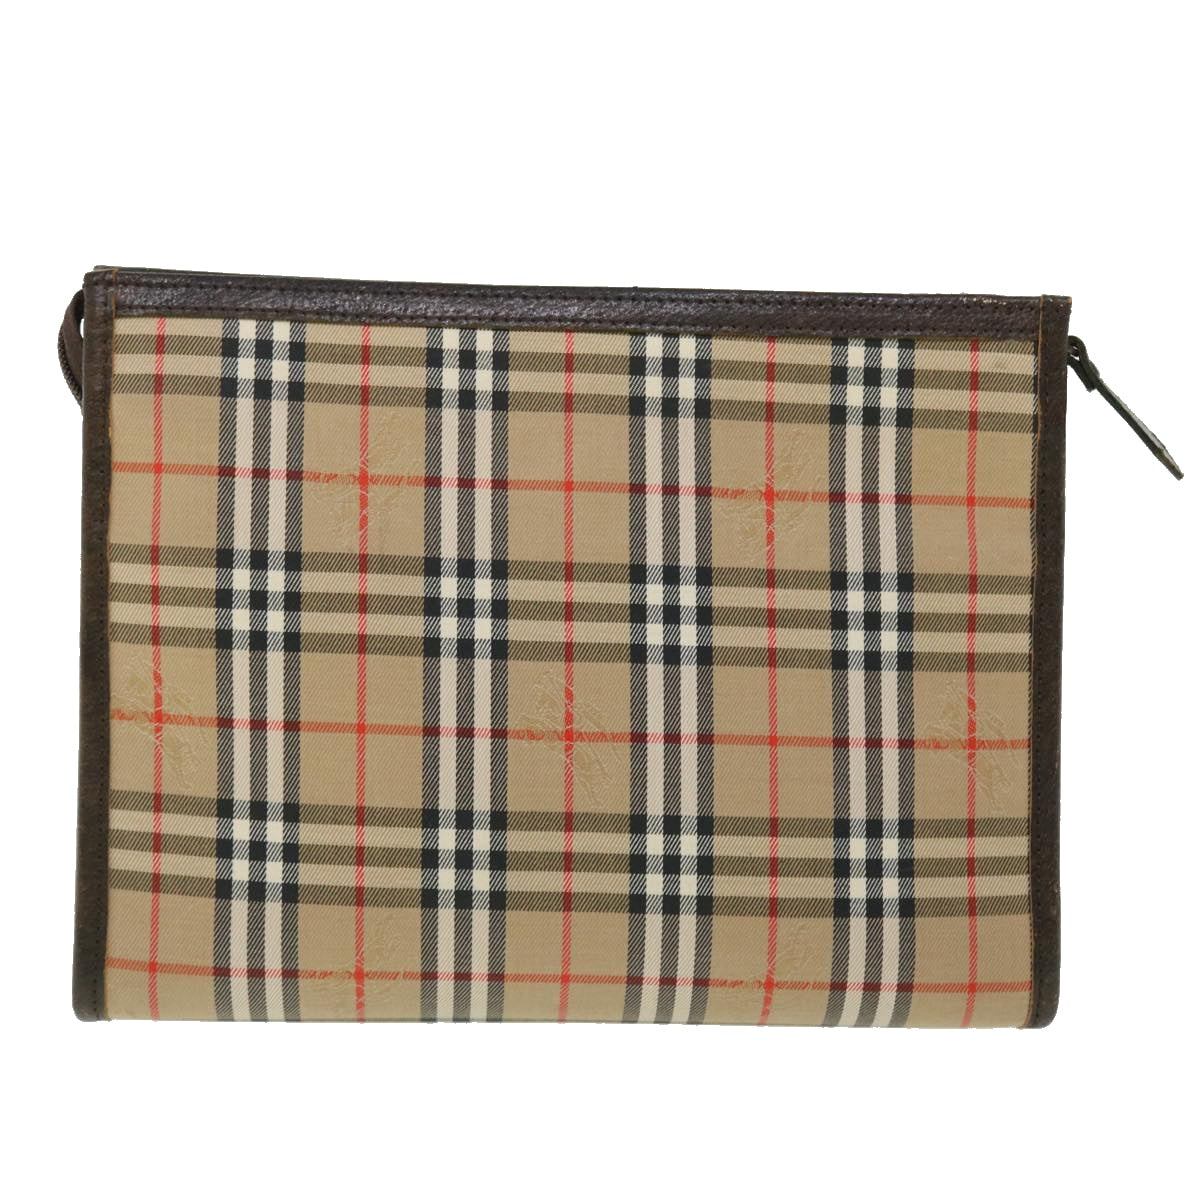 Burberrys Nova Check Clutch Bag Canvas Leather Beige Brown Auth 51662 - 0